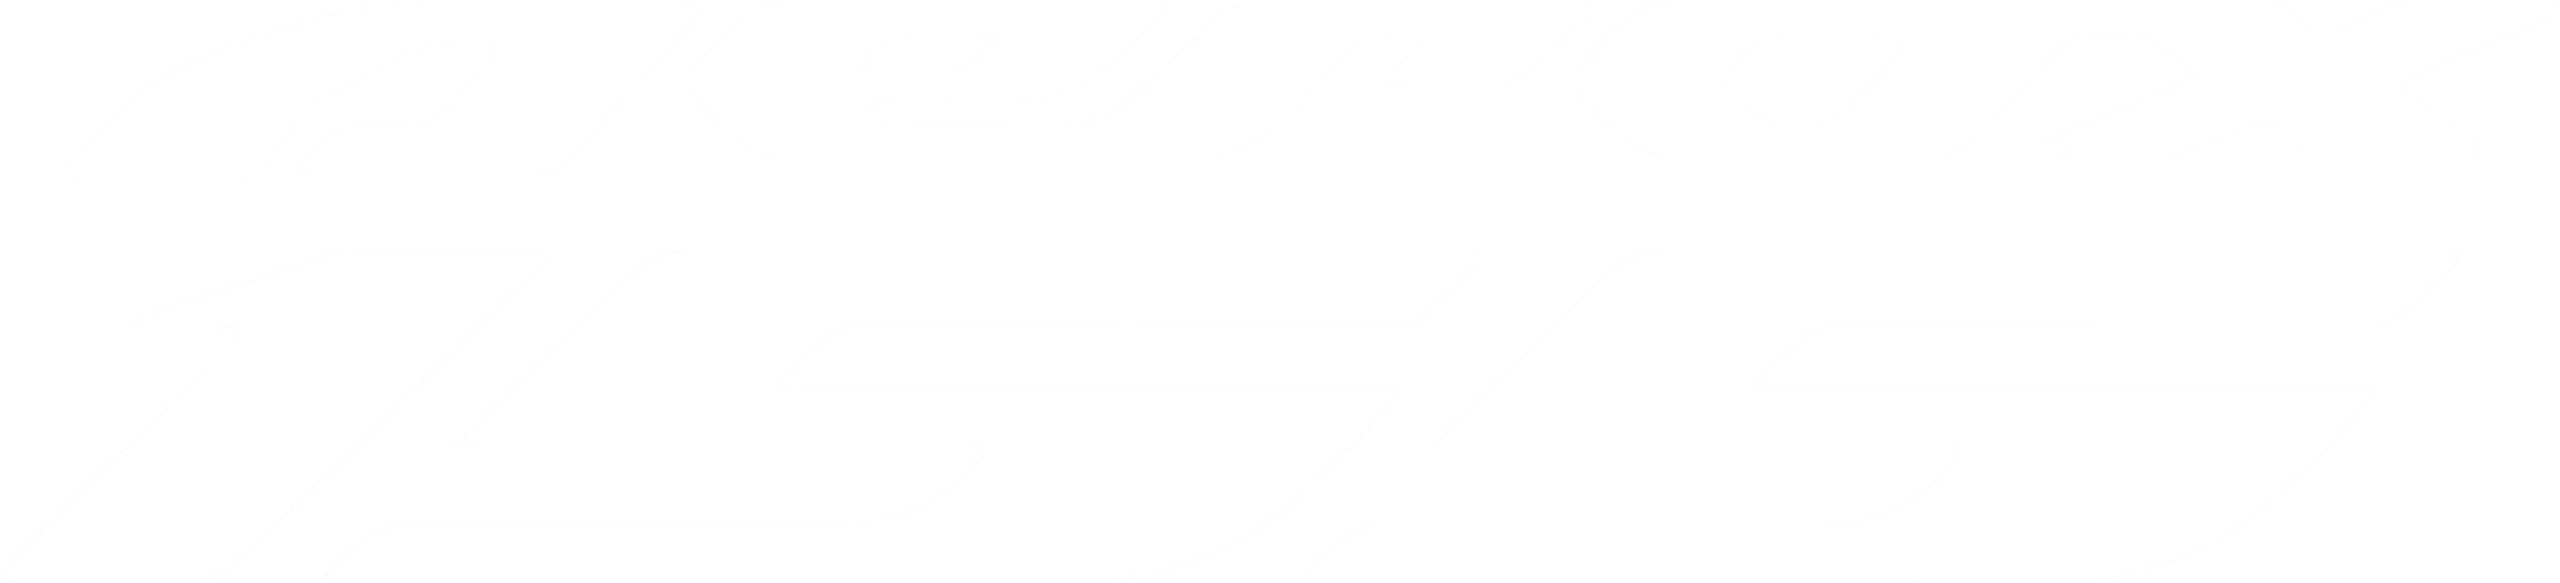 Logo Yamaha Aerox 155